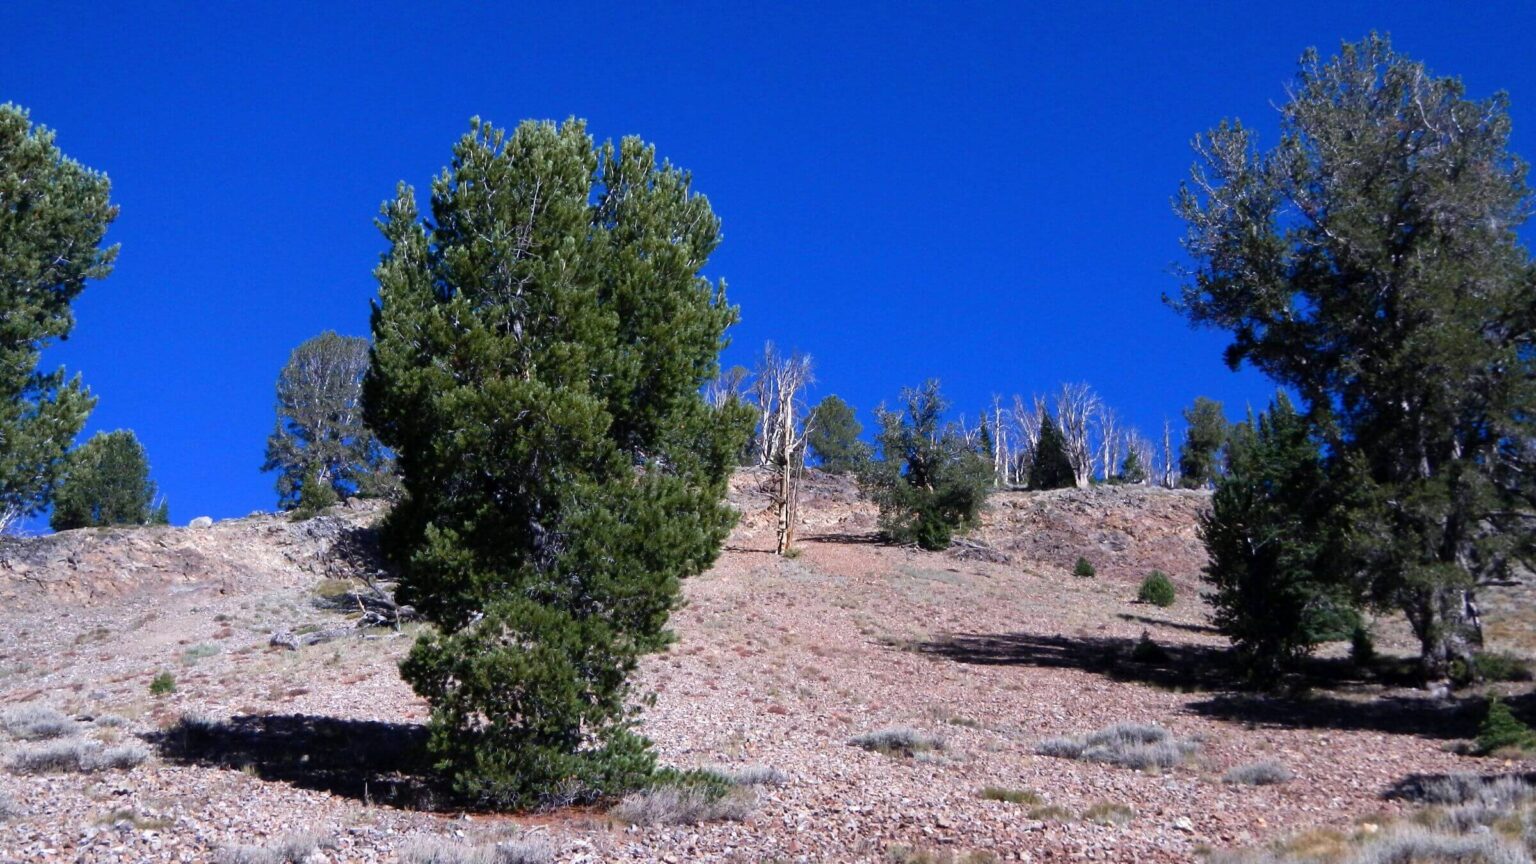 Hemingway-Boulders Wilderness, whitebark pine (Pinus albicaulis), September